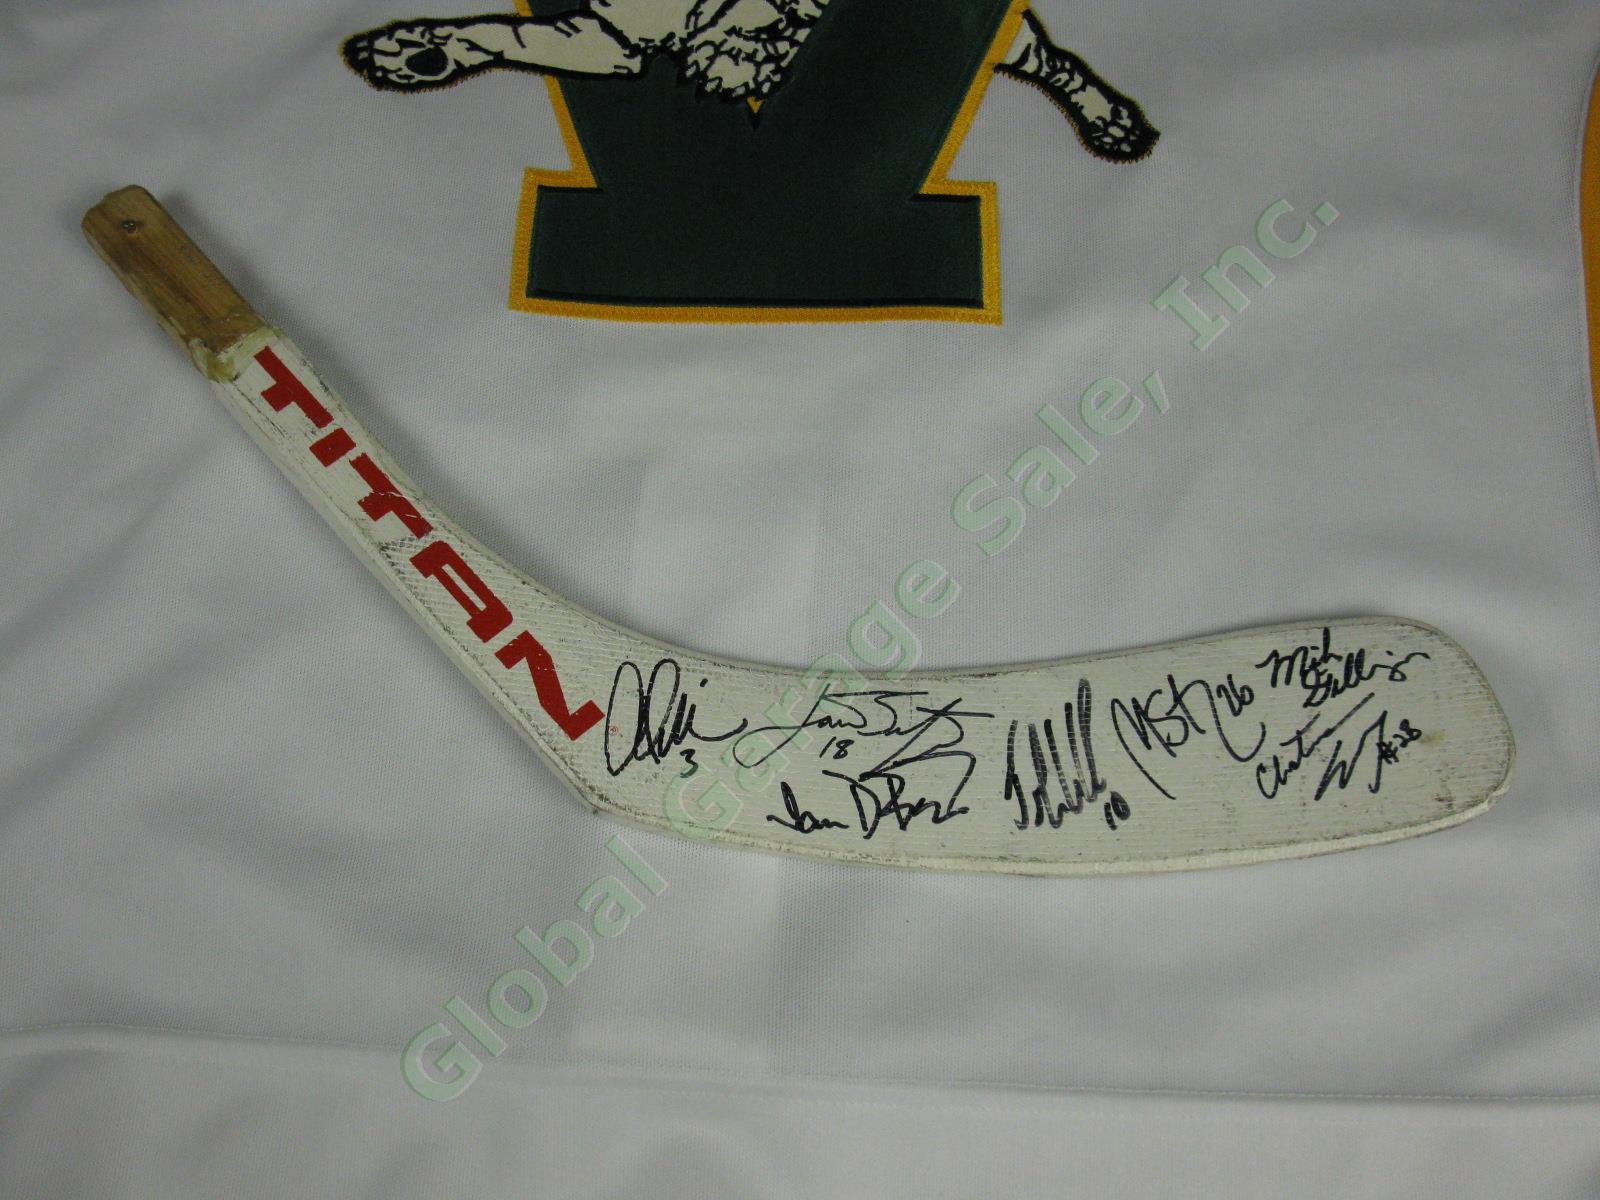 Martin St Louis Signed NHL Selanne Hockey Stick Blade + UVM Catamounts Jersey NR 1